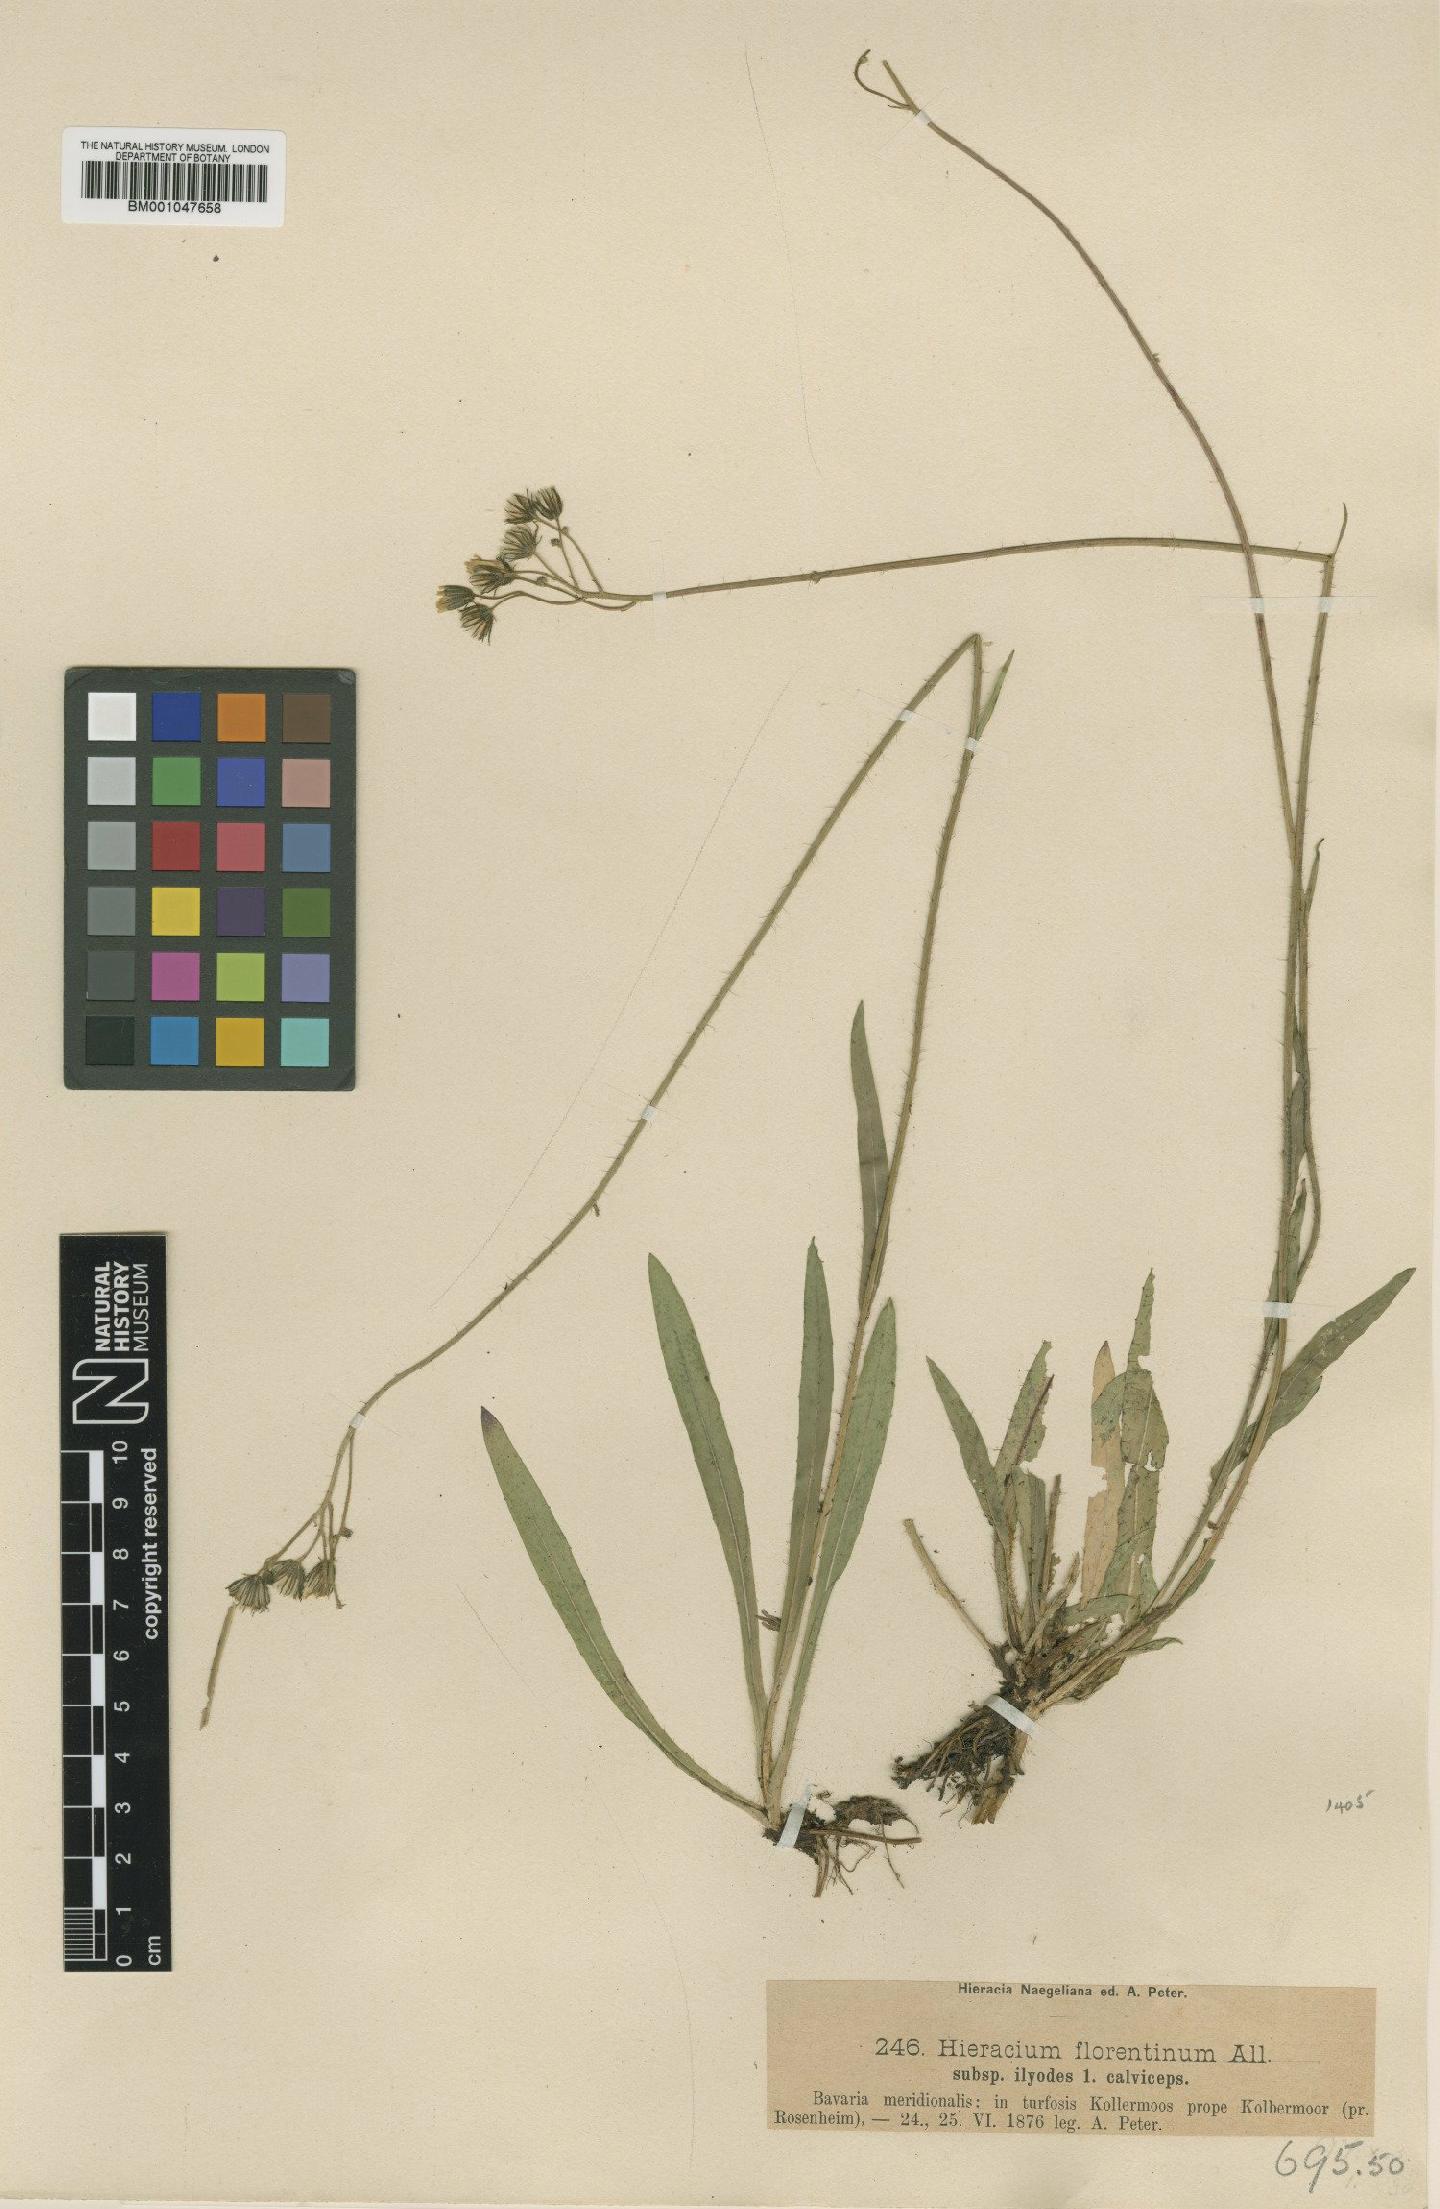 To NHMUK collection (Hieracium florentinum subsp. ilyodes Nägeli & Peter; NHMUK:ecatalogue:2804172)